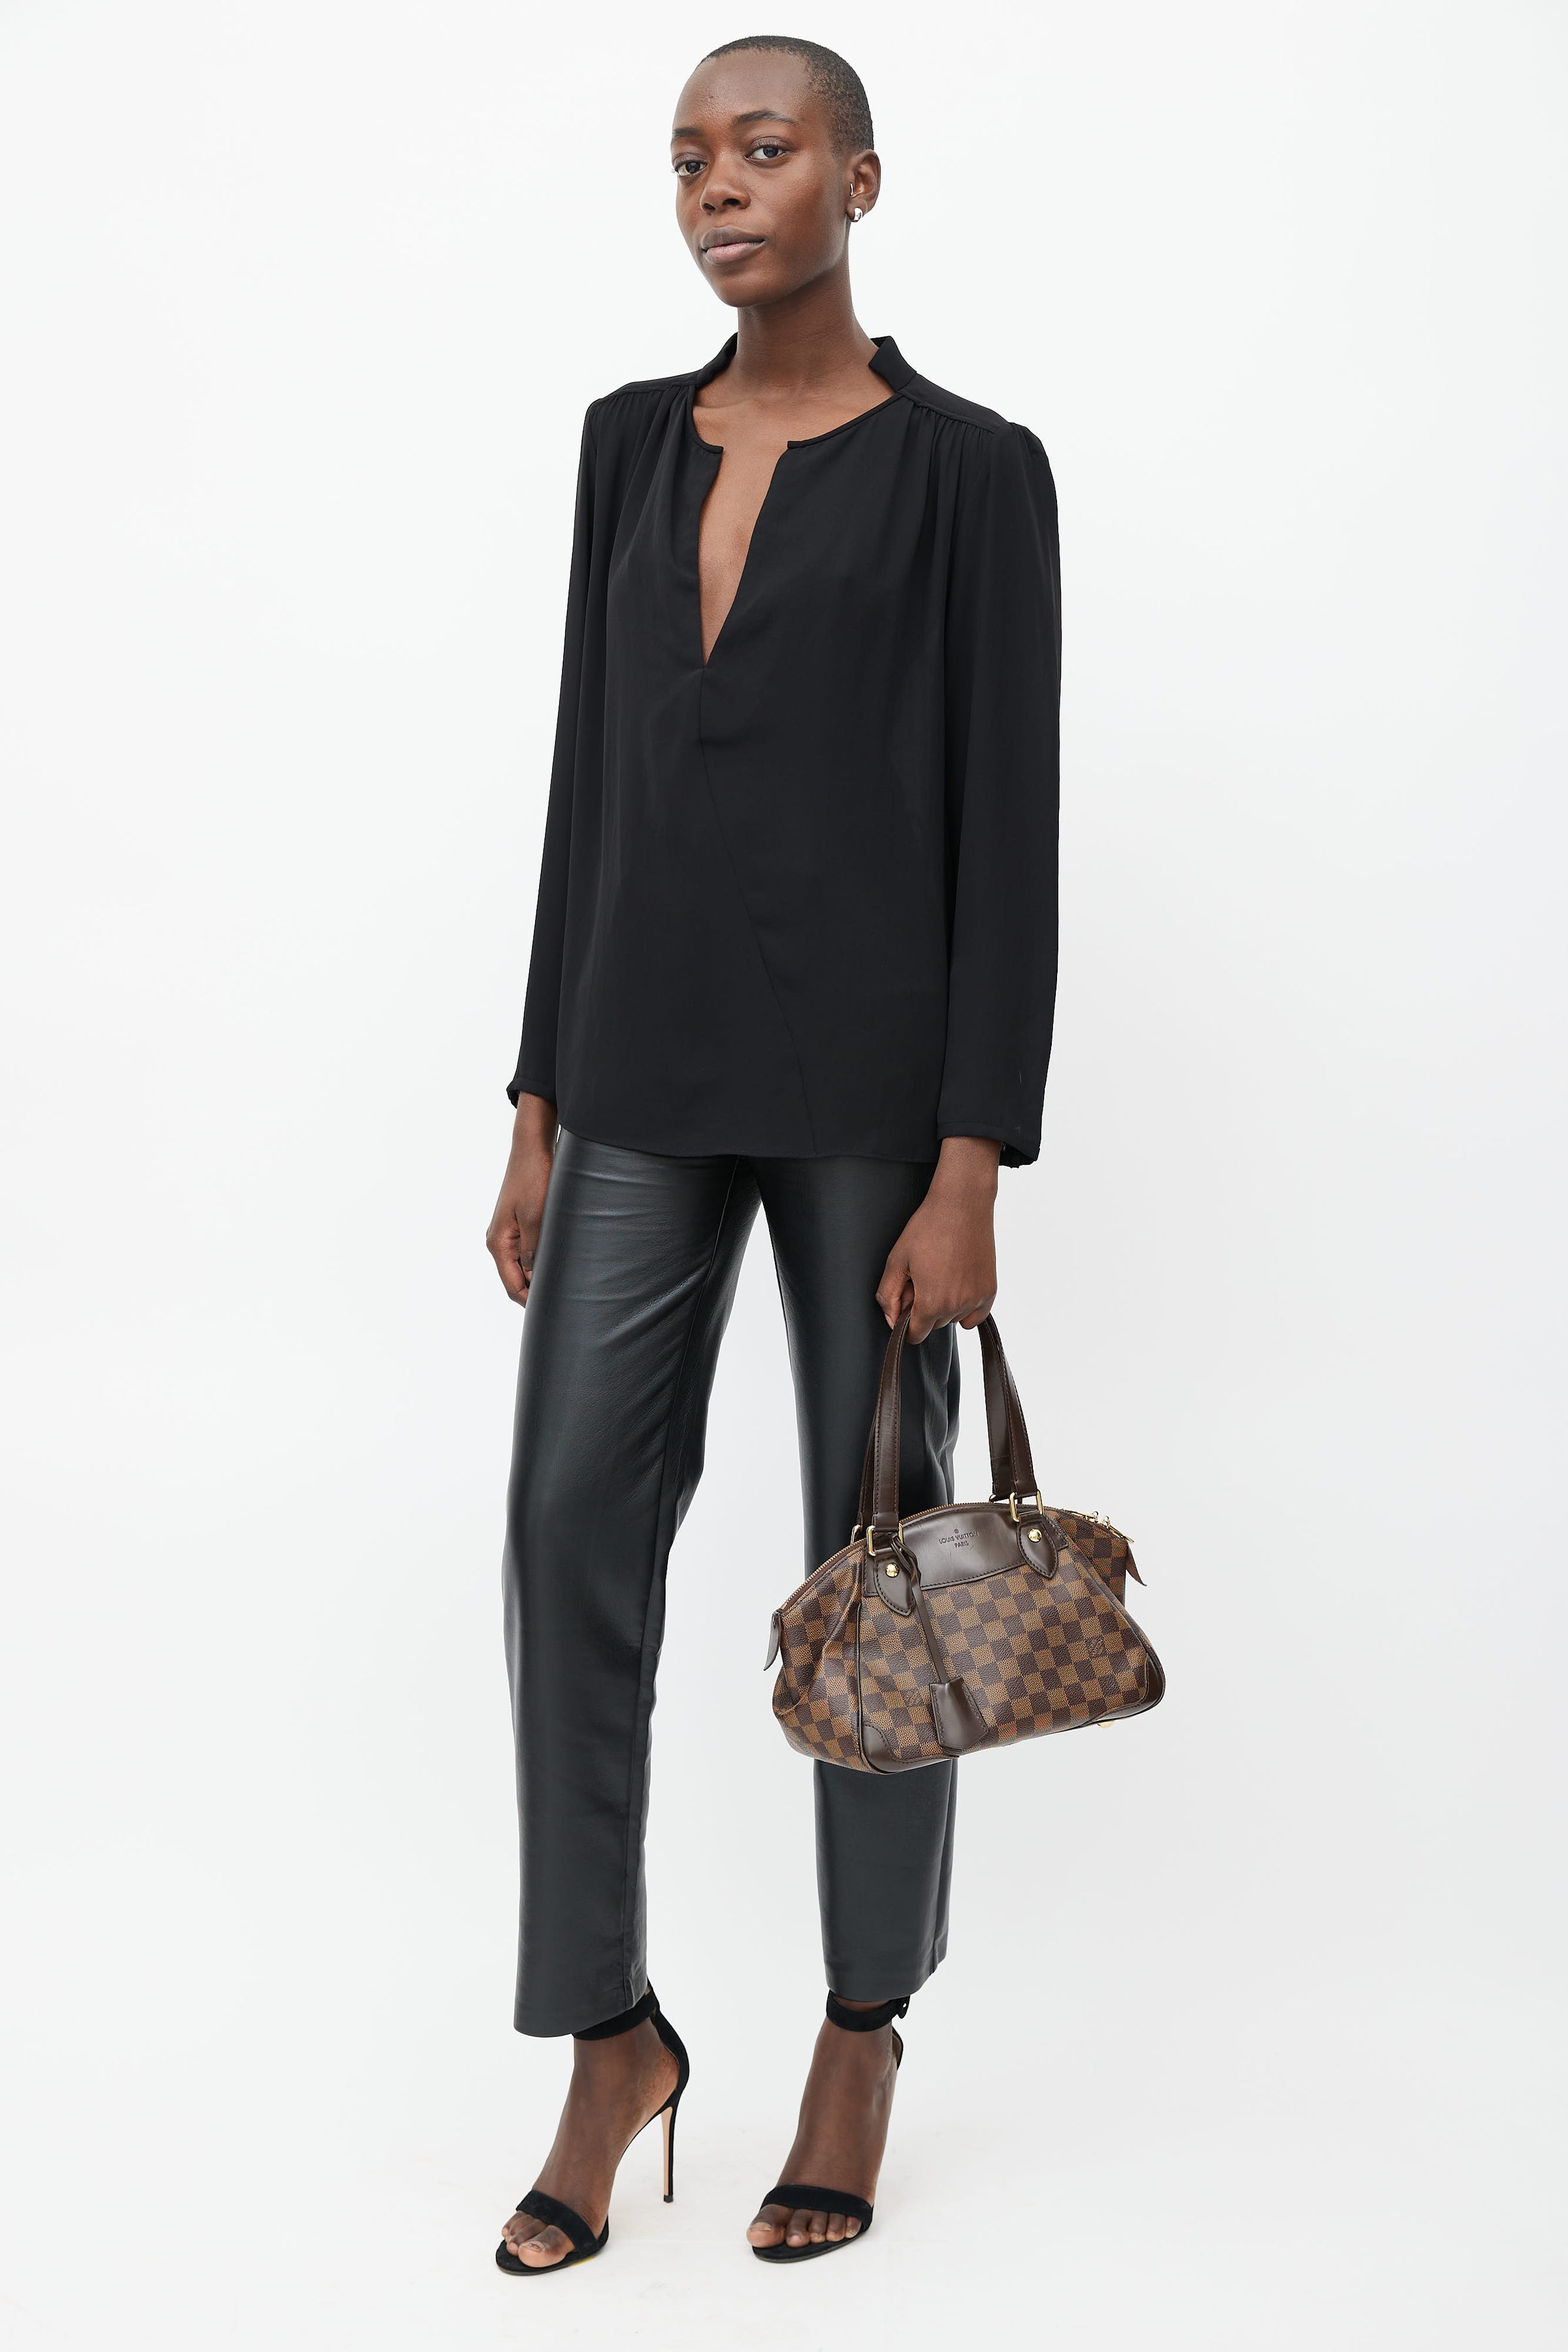 $1,870 LOUIS VUITTON VERONA MM DAMIER N41118 Brown Shoulder Bag Handbag  Full Set